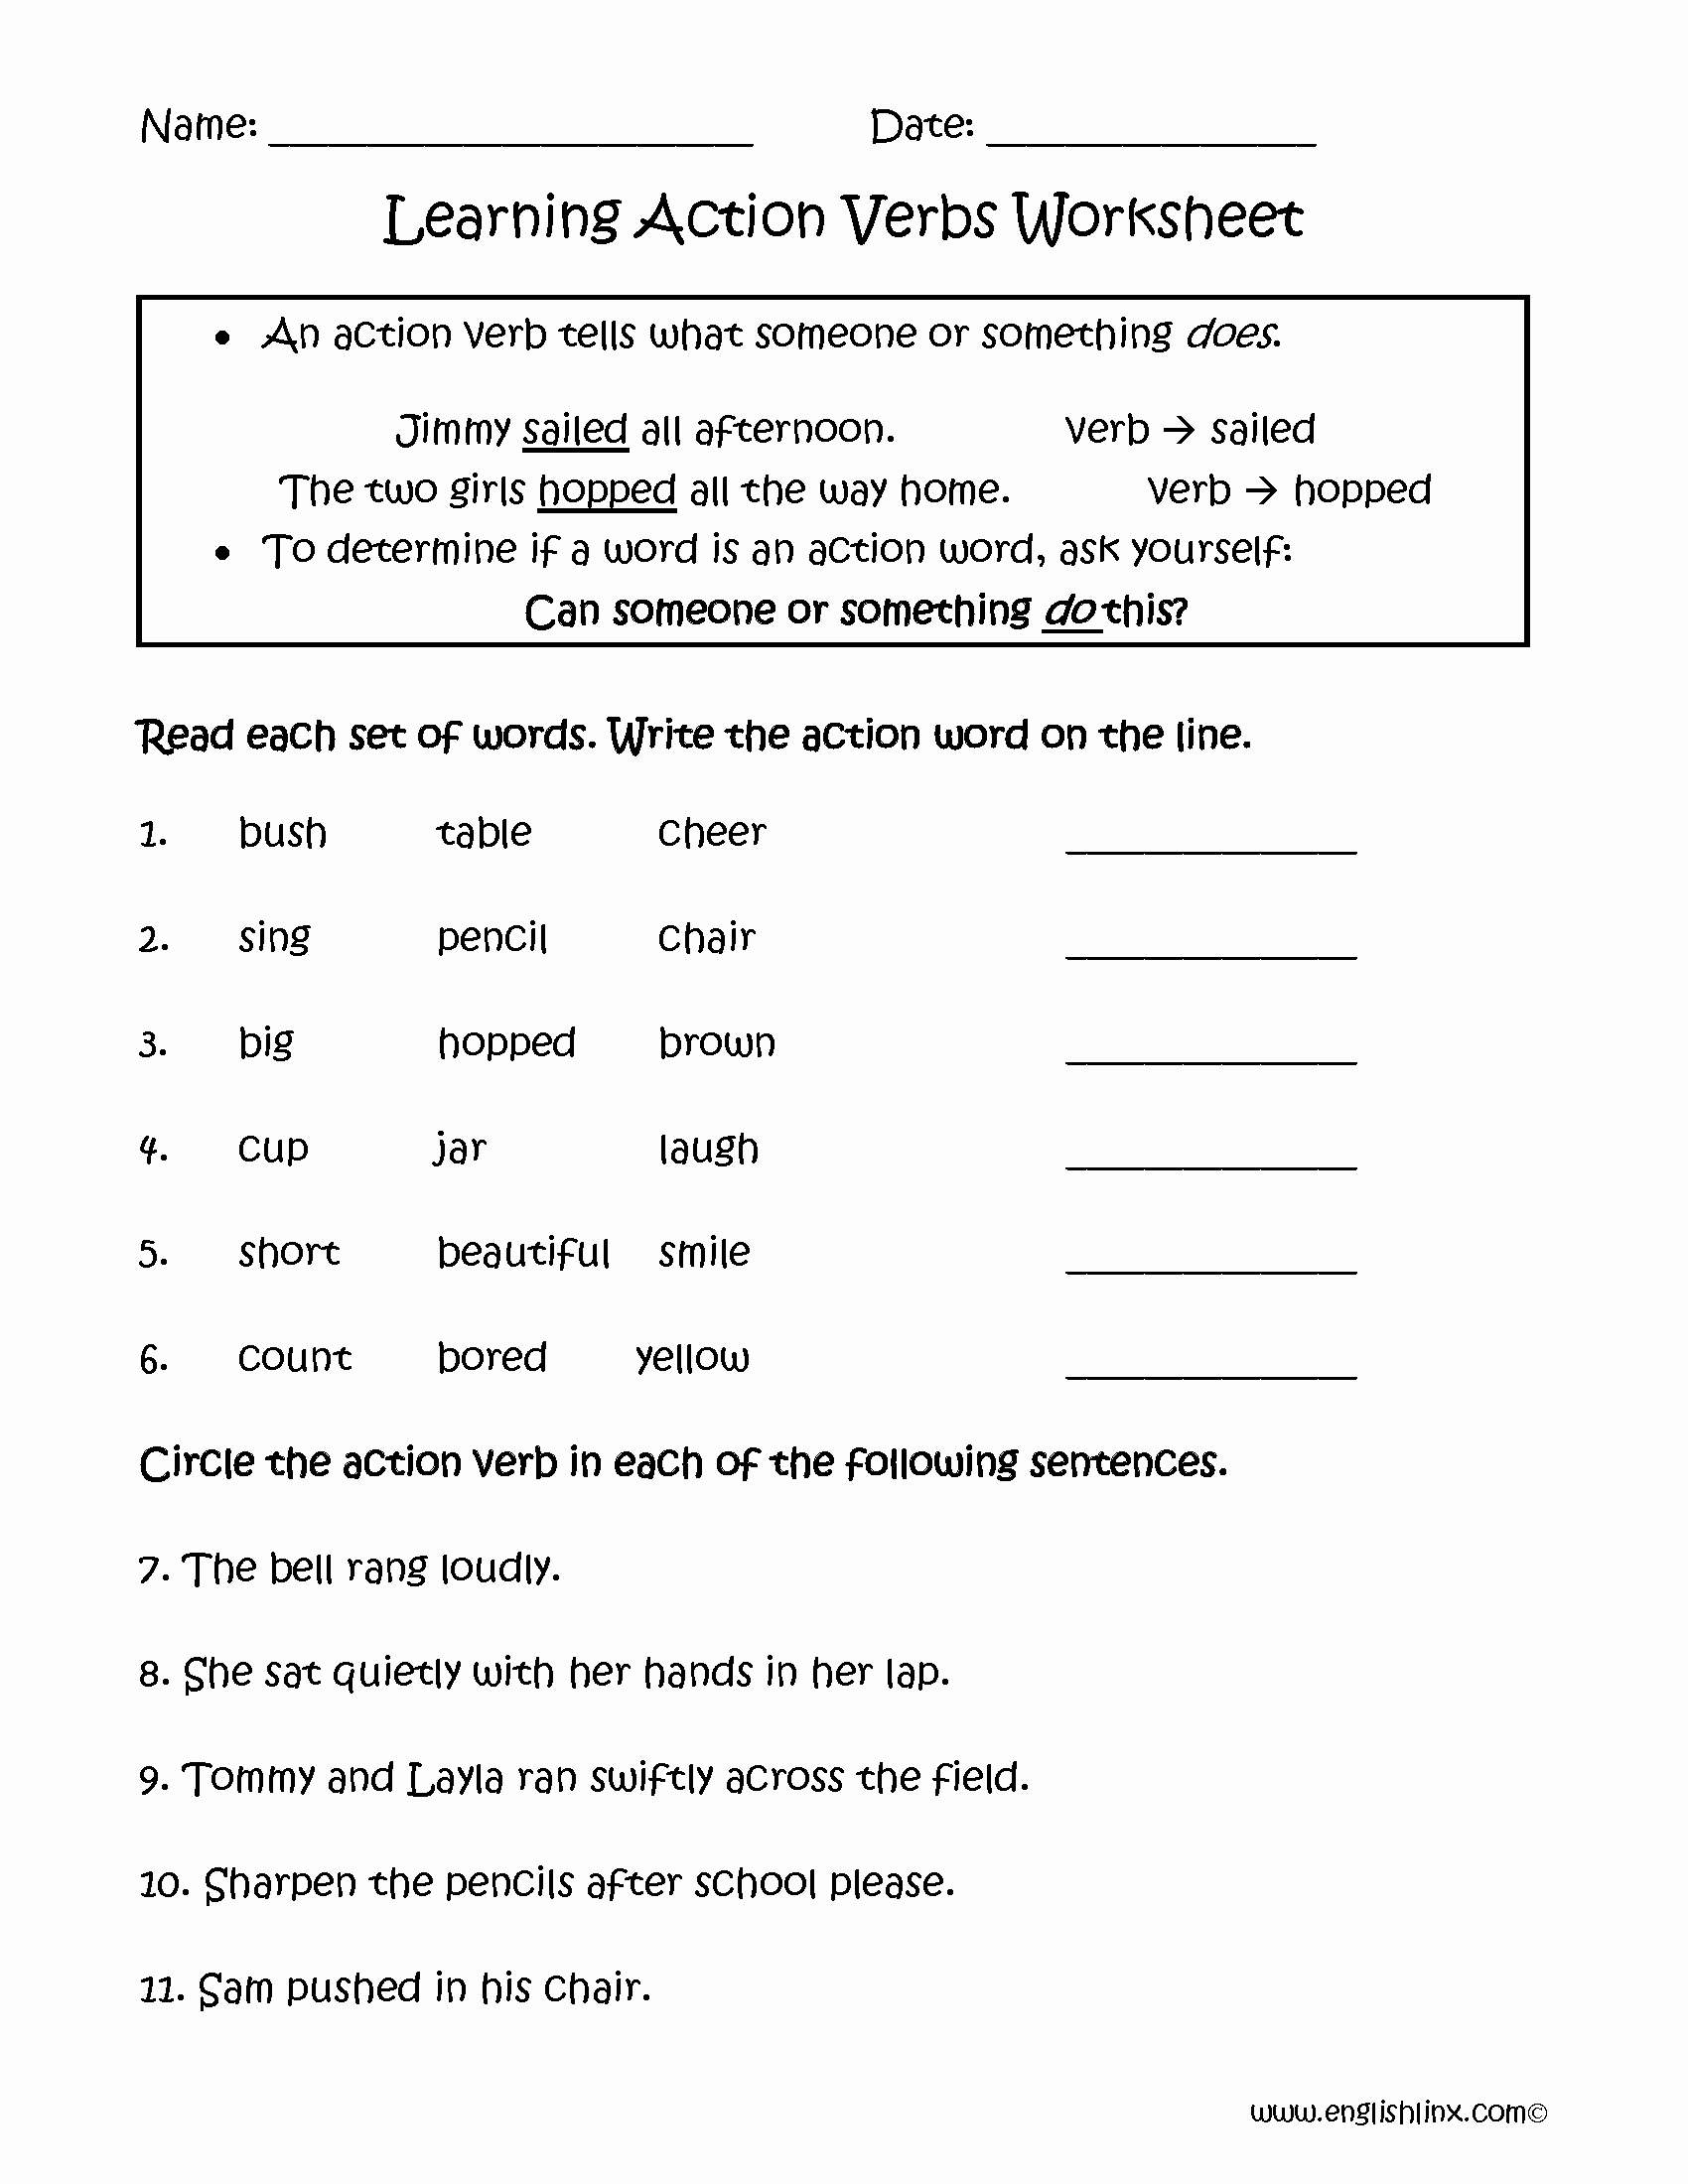 Action and Linking Verbs Worksheet Elegant Verbs Worksheets